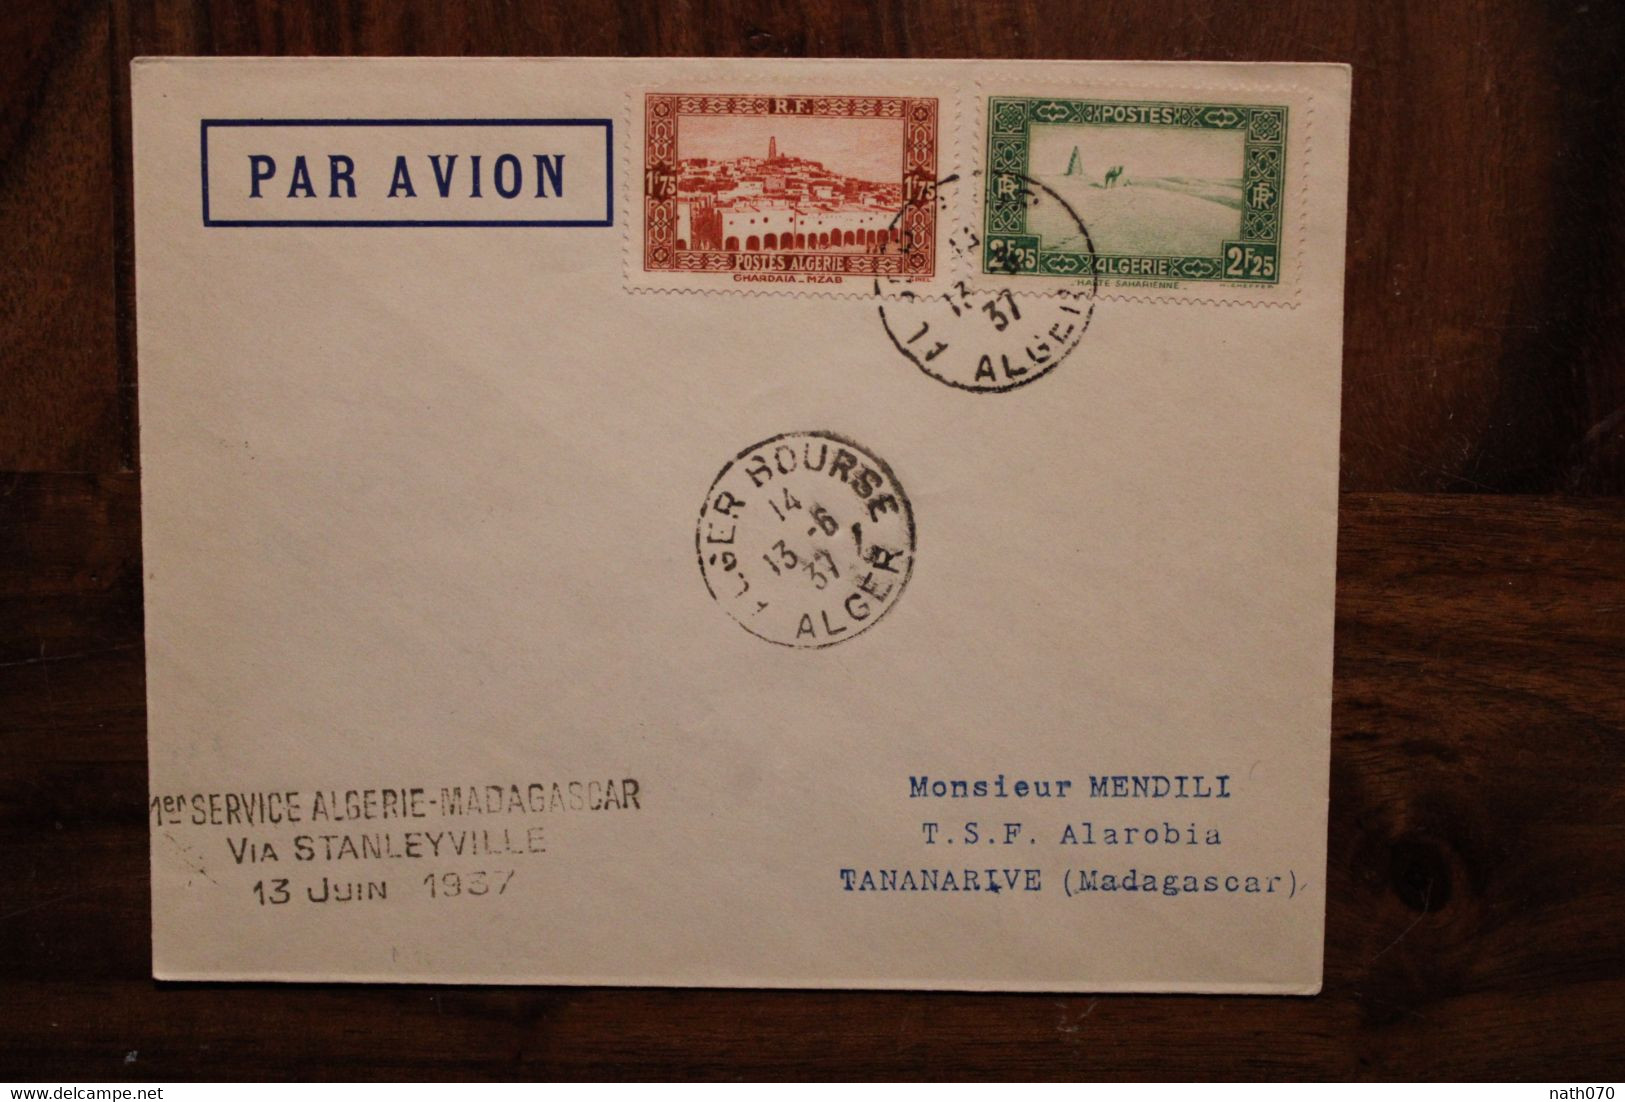 1937 1er Service Algérie Madagascar France Via Stanleyville  Enveloppe Cover Colonie Par Avion Air Mail - Luftpost